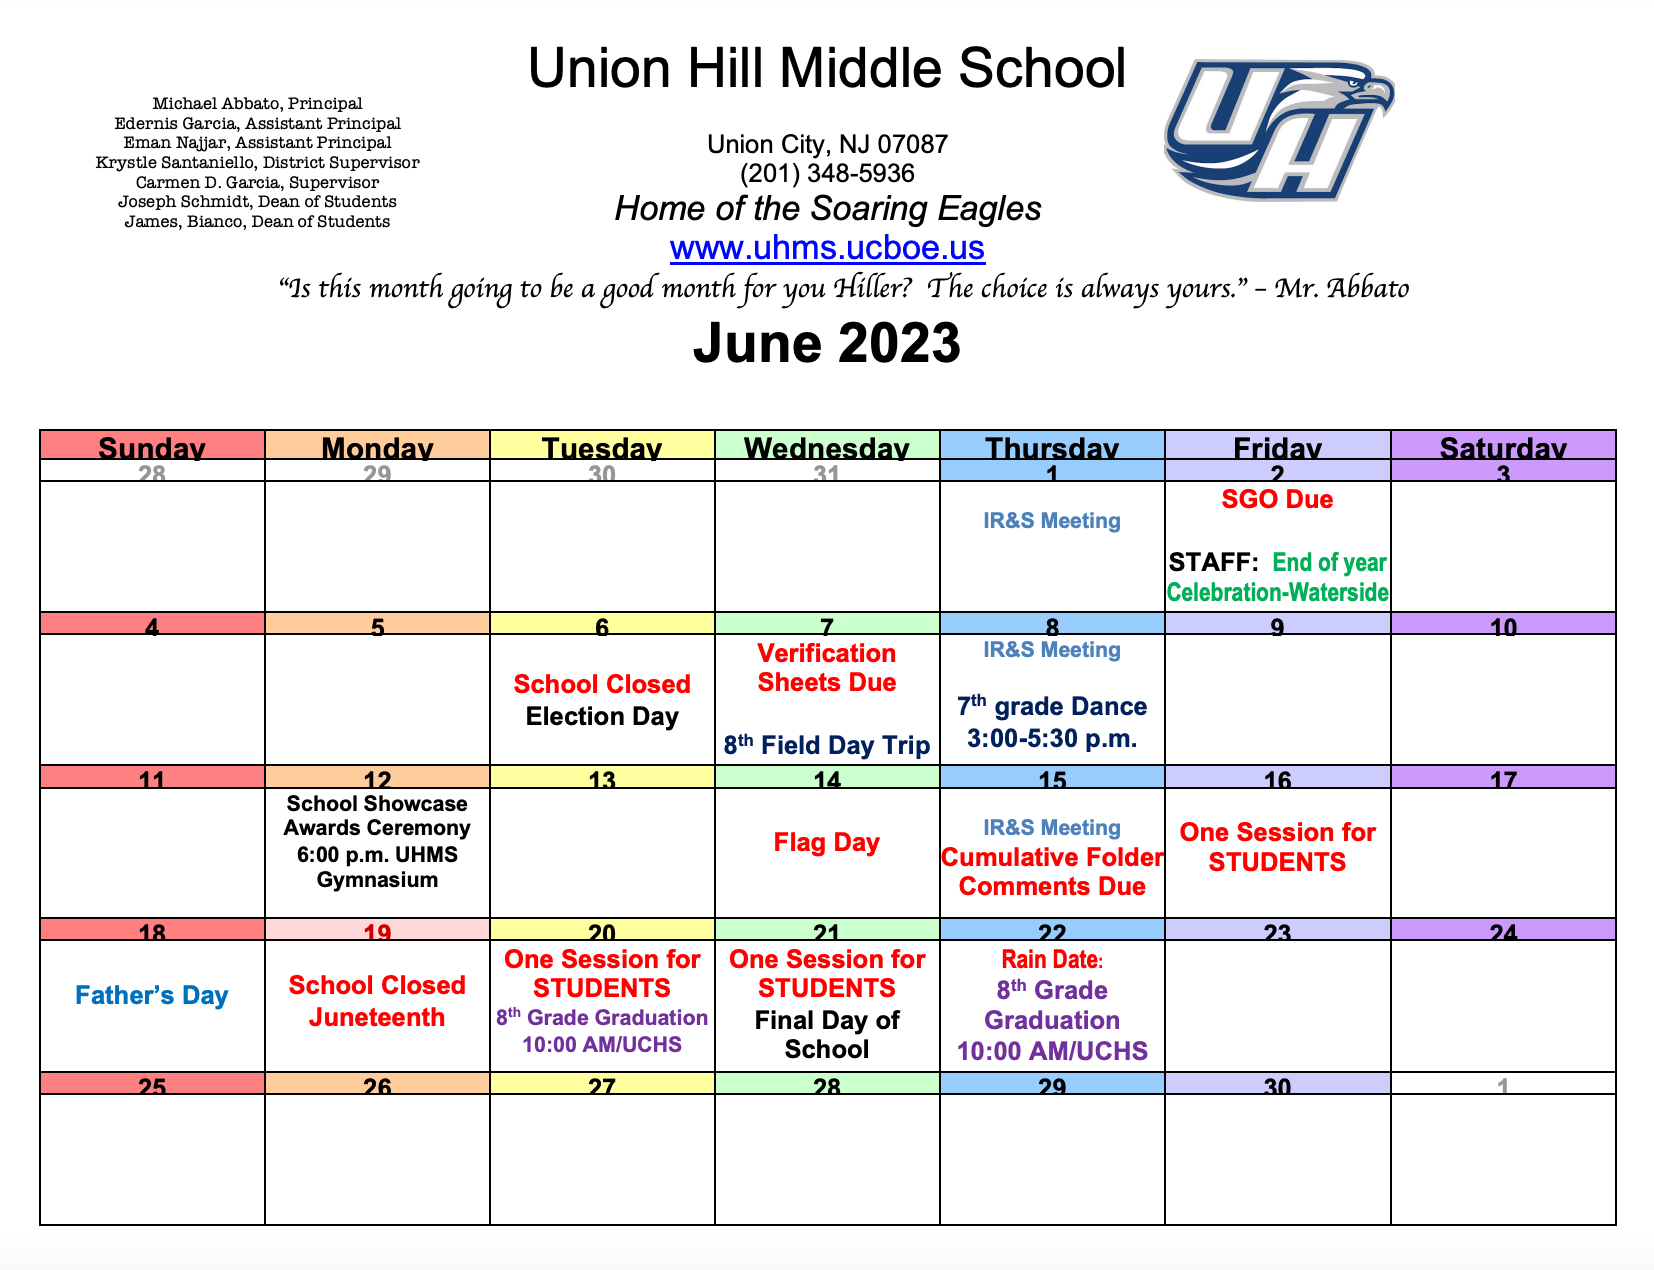 June 2023 Calendar-Union Hill Middle School